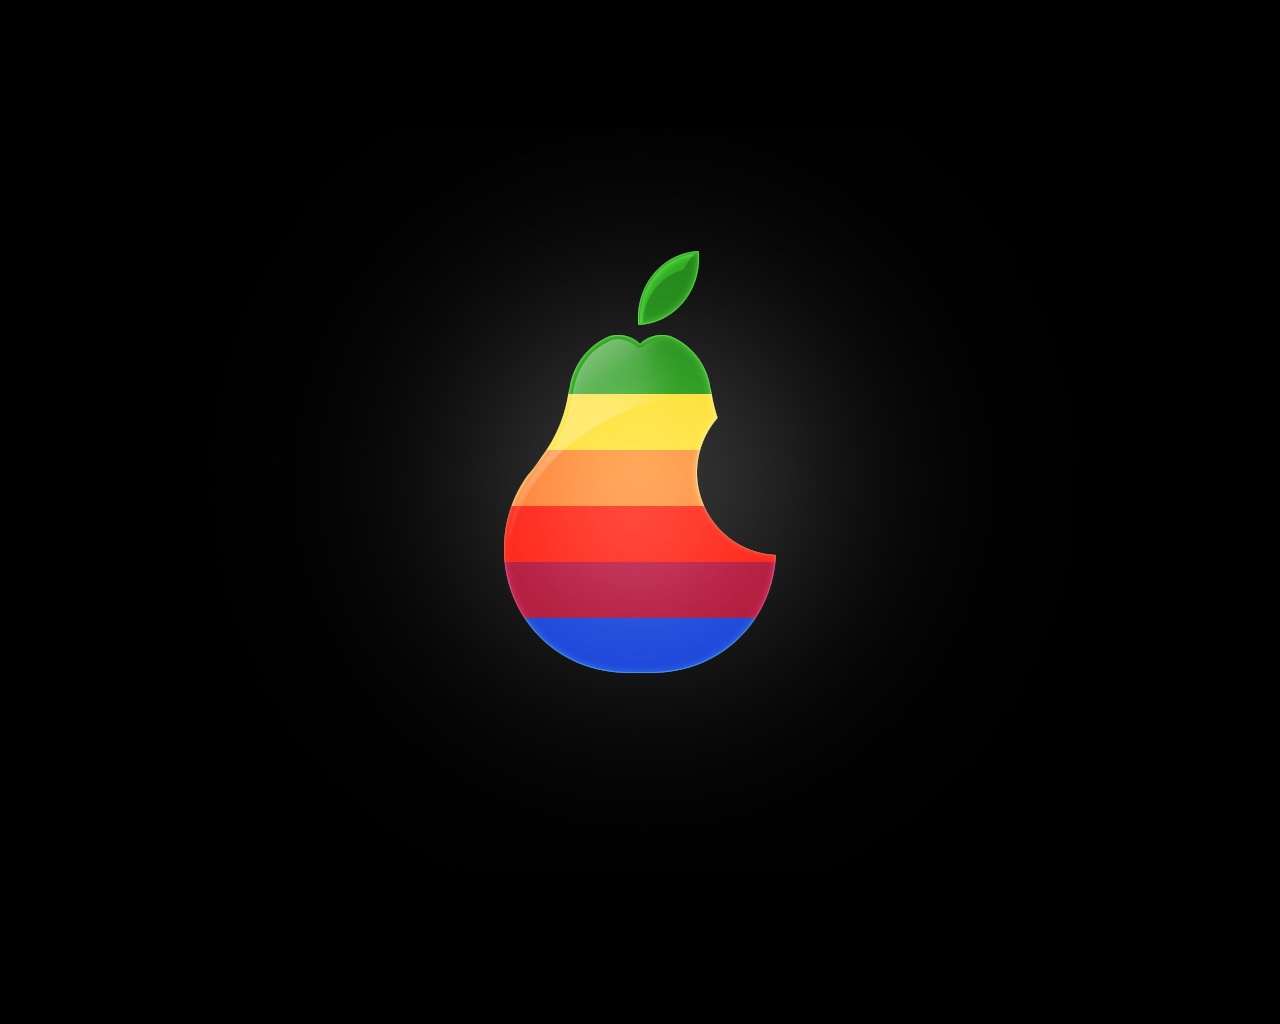 Apple Macintosh Pear Logo Desktop Wallpaper And Stock